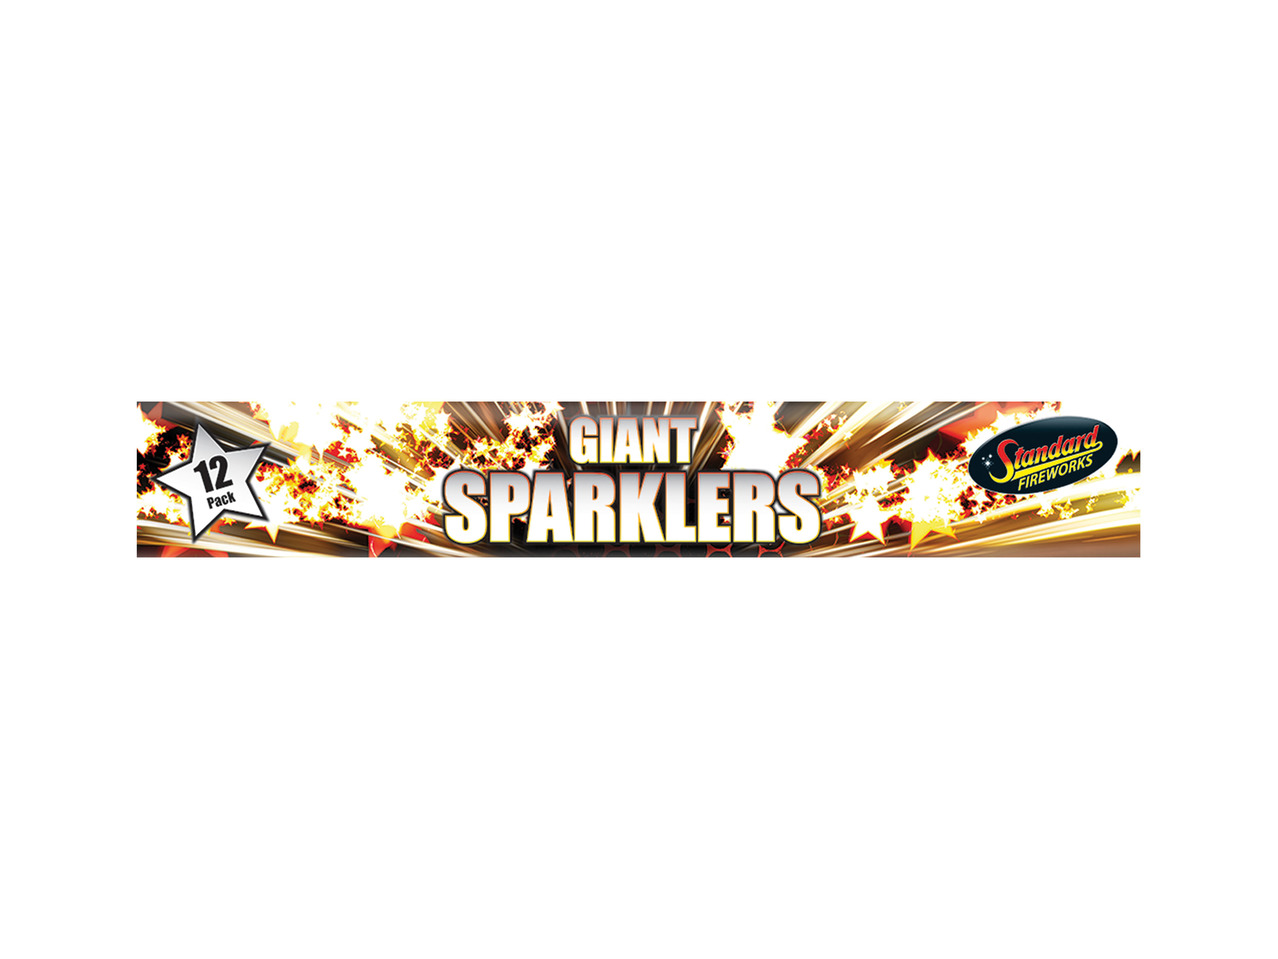 Giant Sparklers1